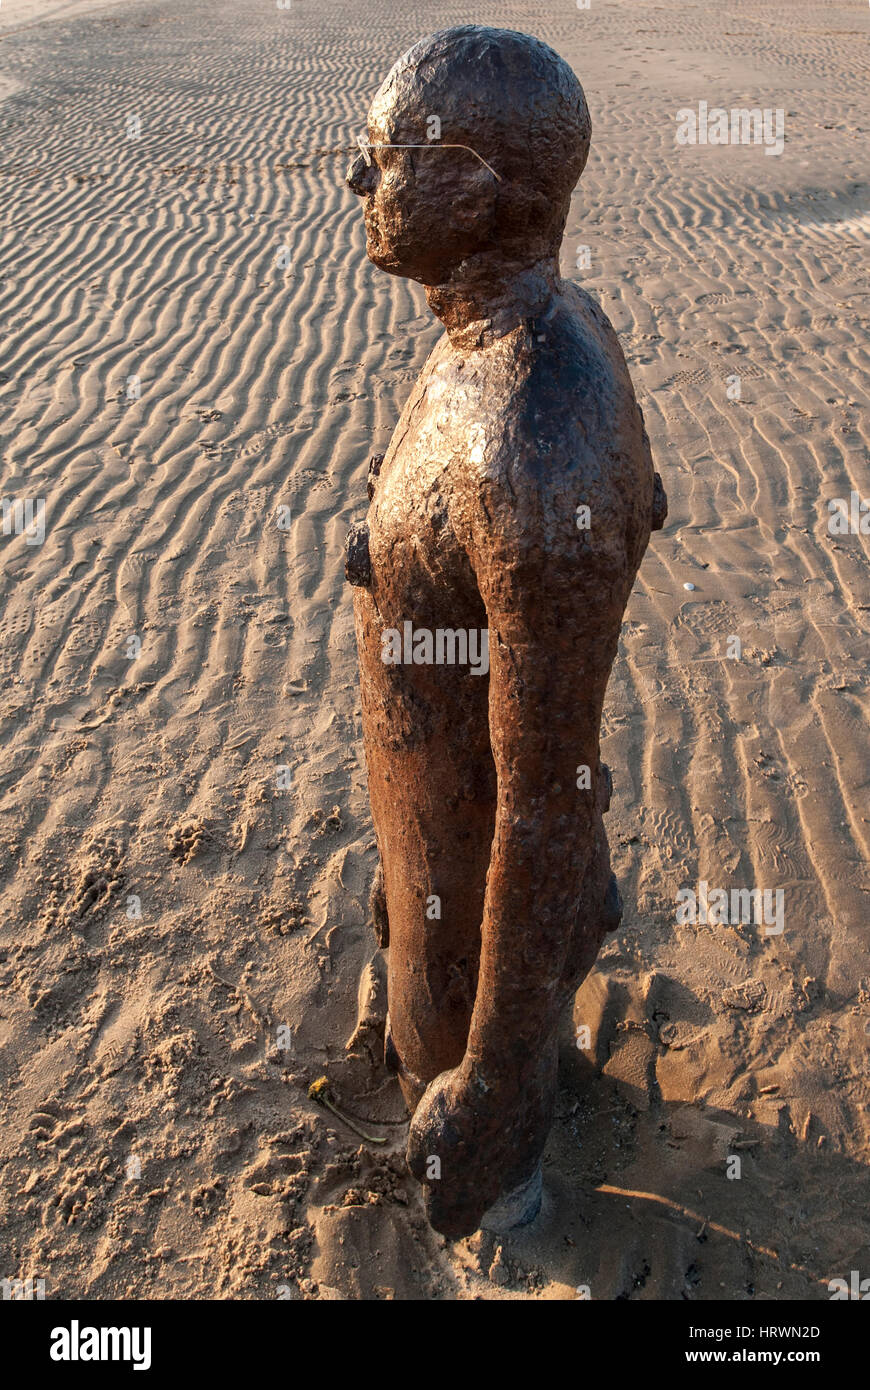 Iron Man statua. Crosby beach Liverpool Merseysude Antony Gormley in altro luogo Foto Stock